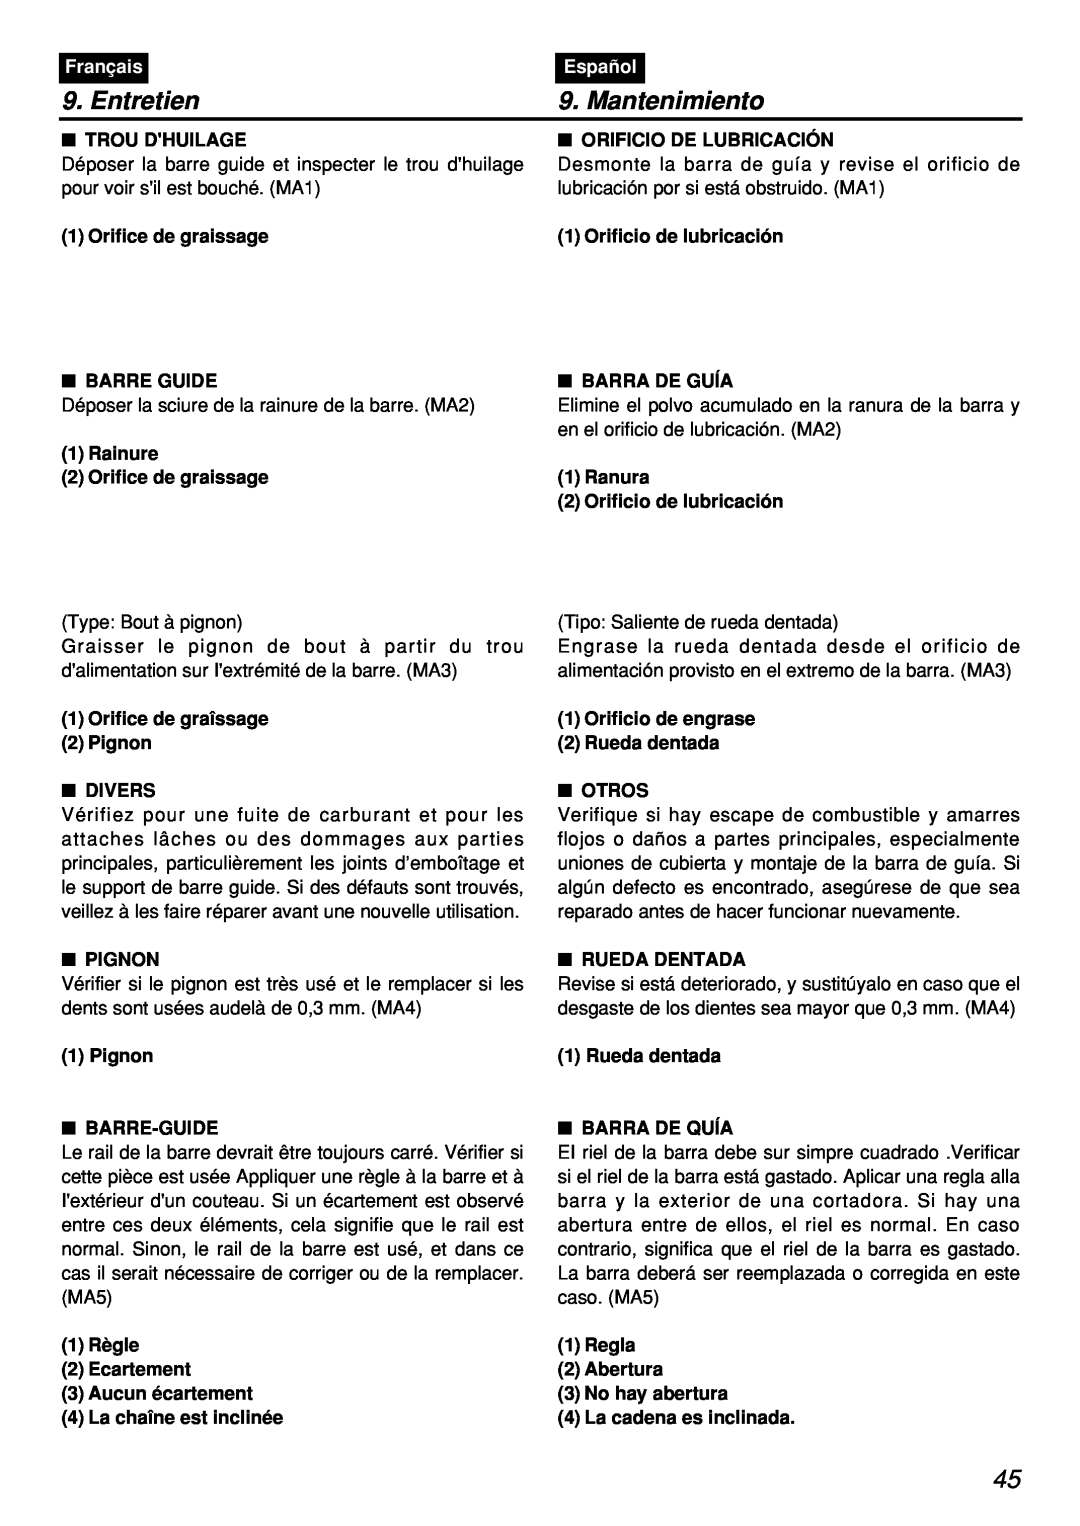 Zenoah PSZ2401, PSZ2401-CA manual Mantenimiento, Entretien, Français, Español, Trou Dhuilage, Orificio De Lubricación 